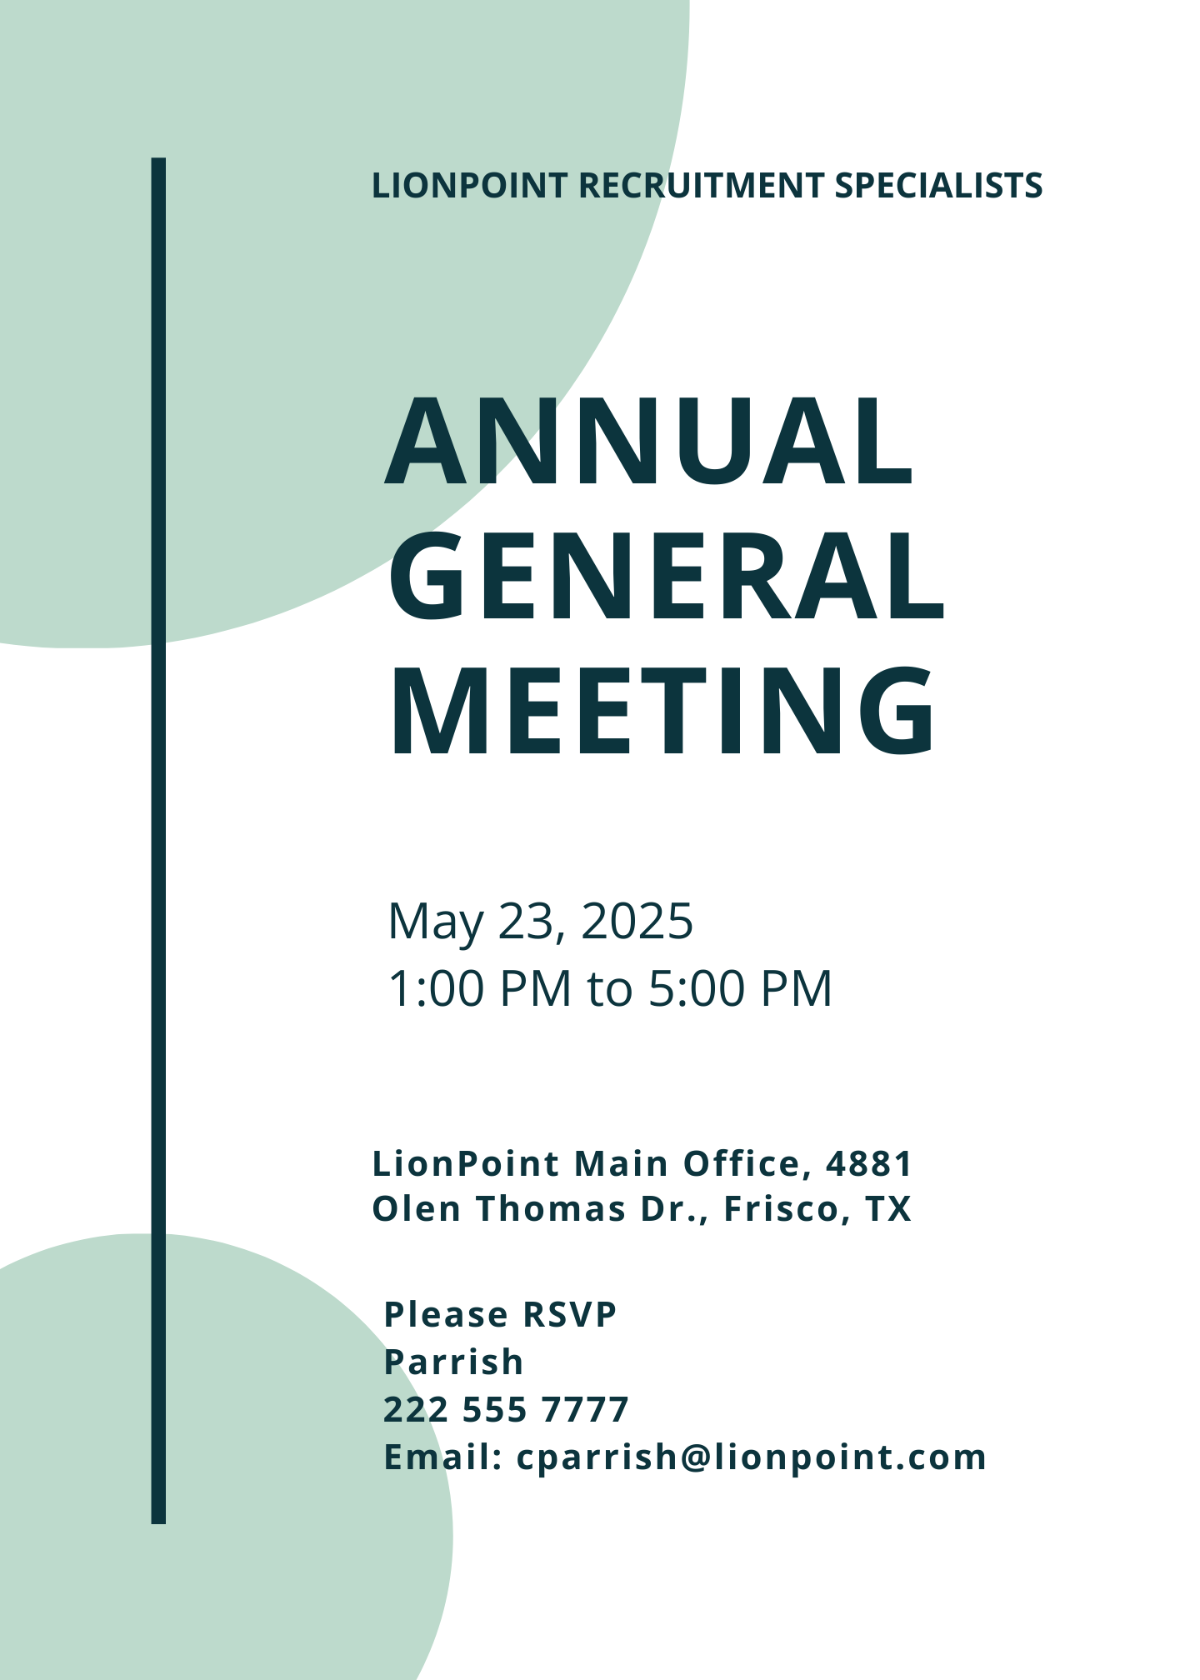 Annual General Meeting Invitation